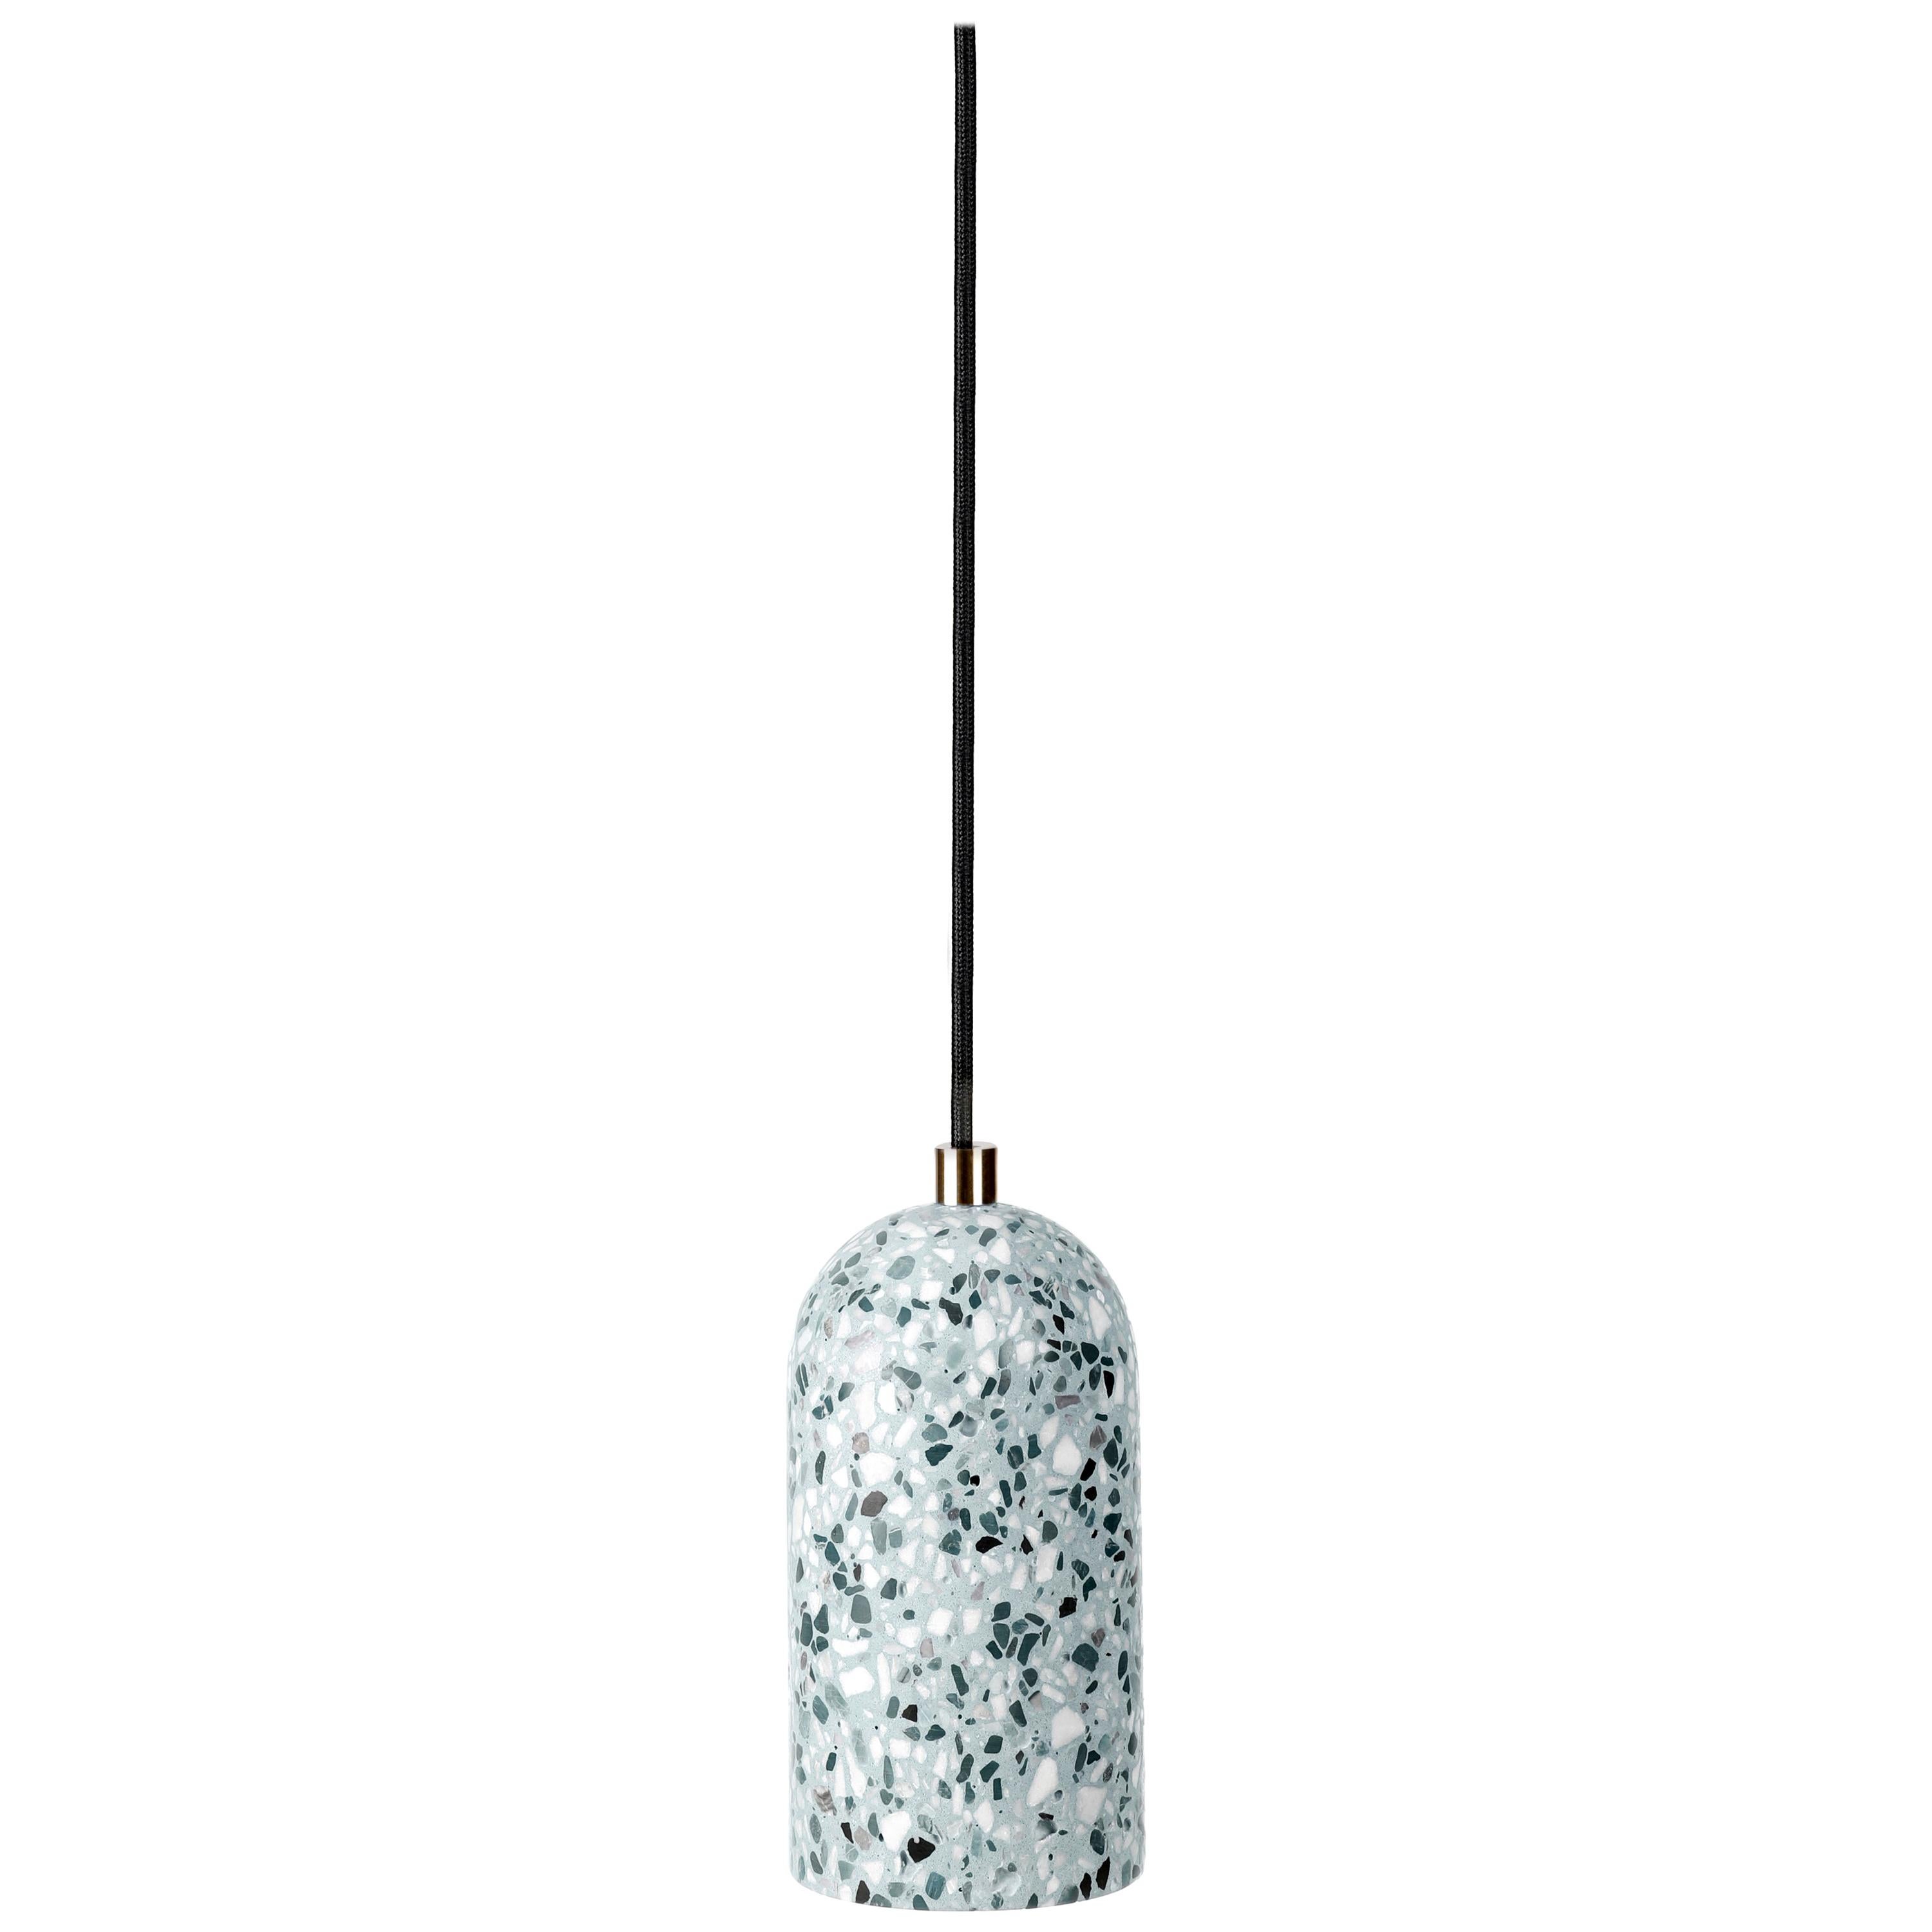 'U' Sky Blue Terrazzo Pendant Lamp by Bentu Design For Sale